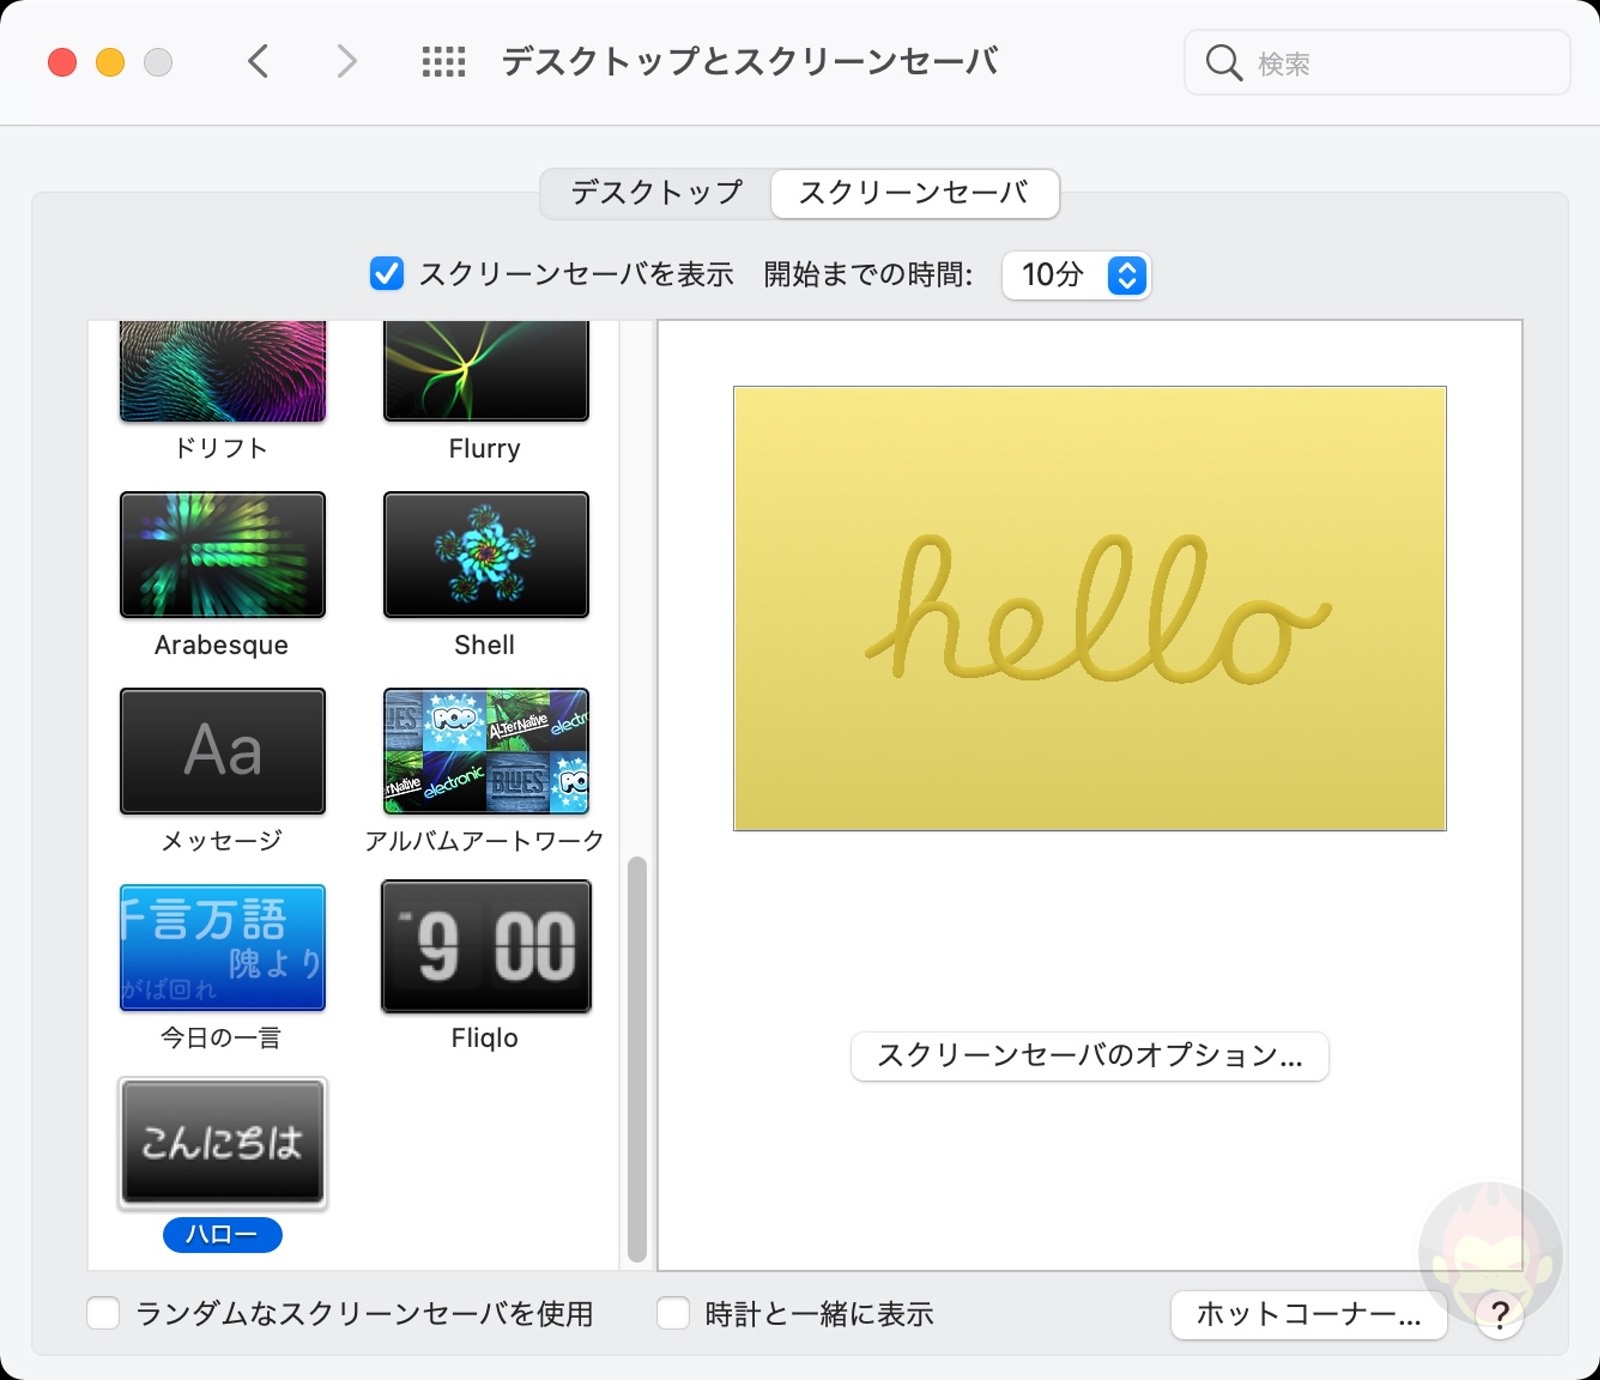 Hello Screensaver hidden in macOS 04